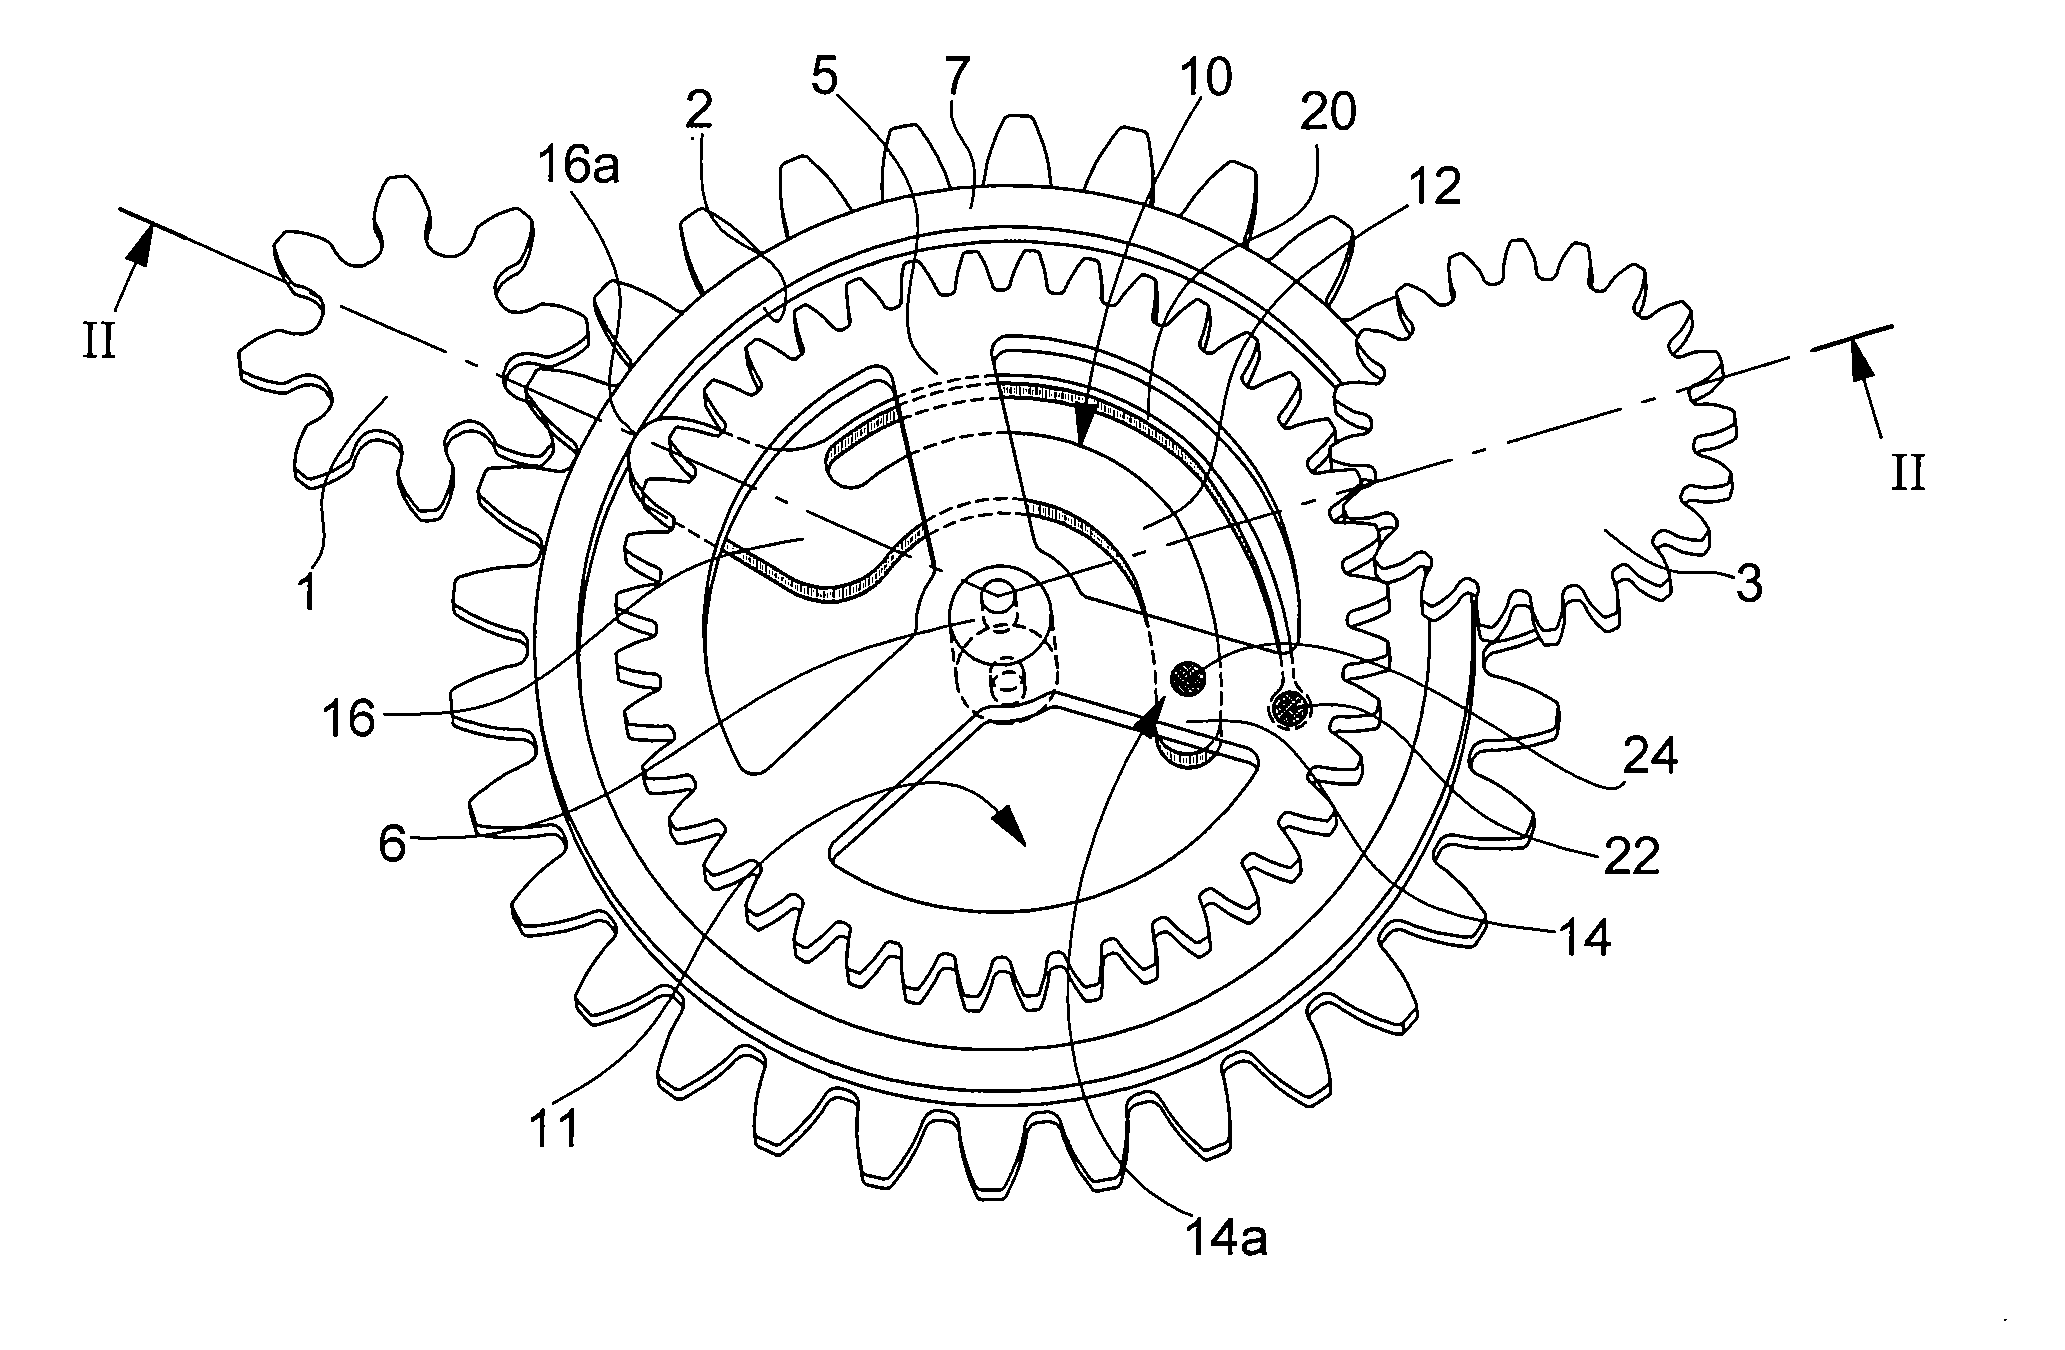 Reverser mechanism for uni-directional rotational driving of a wheel set